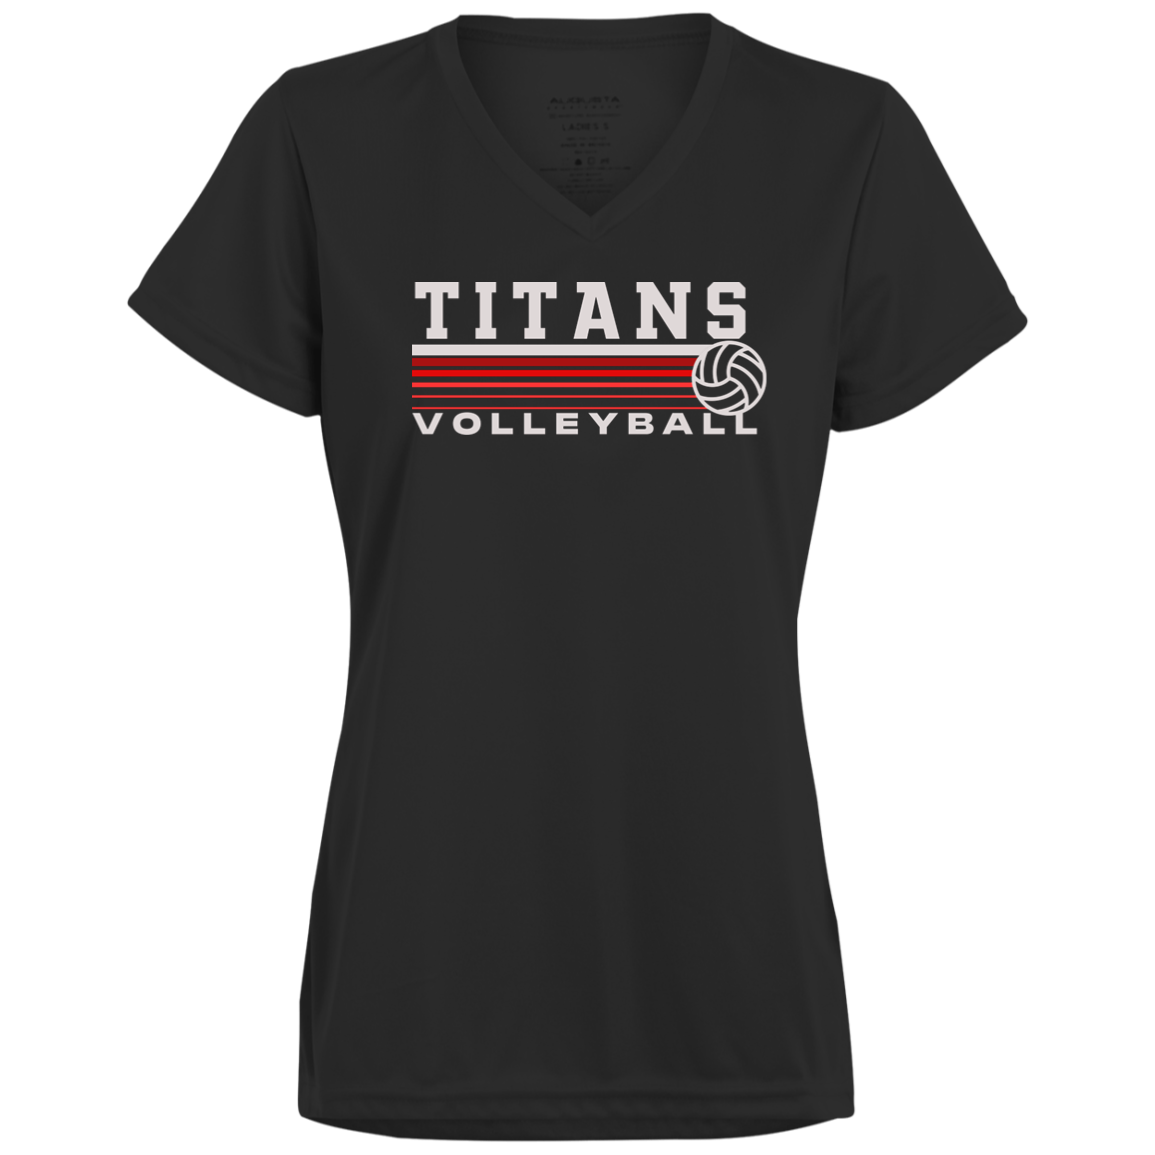 TITANS Volleyball Ladies’ Moisture-Wicking V-Neck Tee